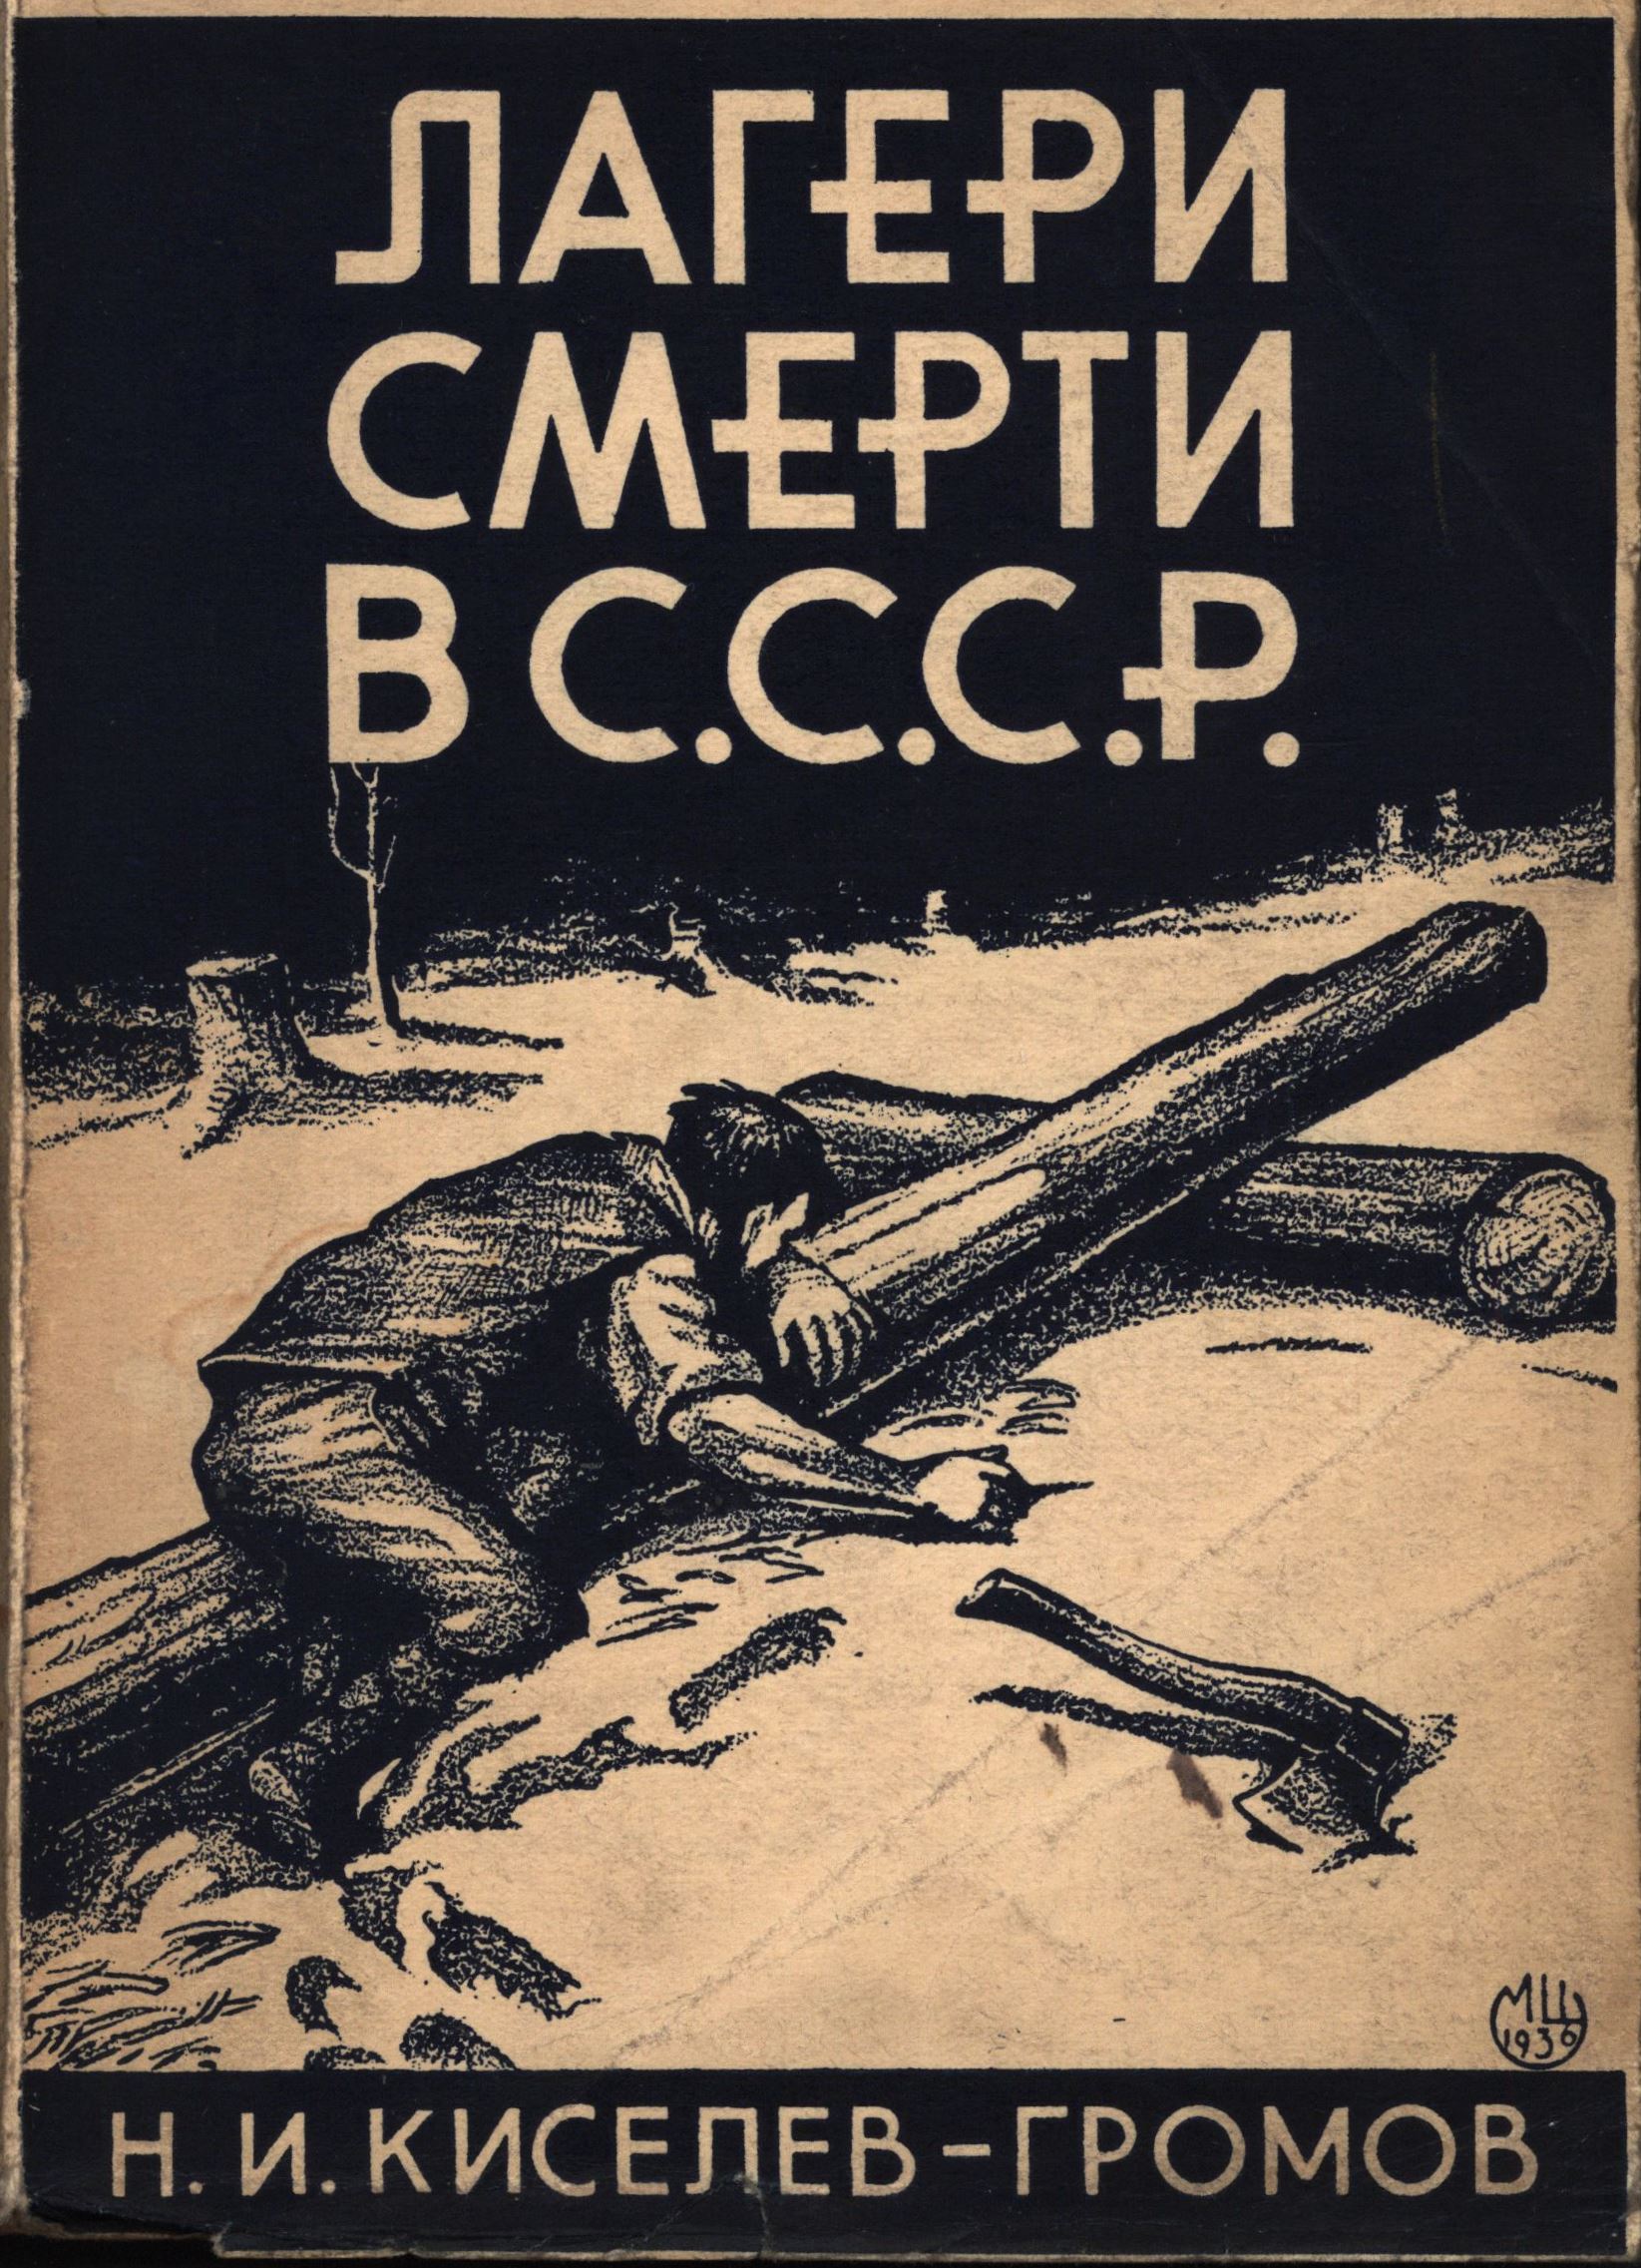 Ruskojazyčné vydání knihy Tábory smrti v SSSR vyšlo v roce 1936 v Šanghaji. Zdroj: Slovanská knihovna NK/cechoslovacivgulagu.cz